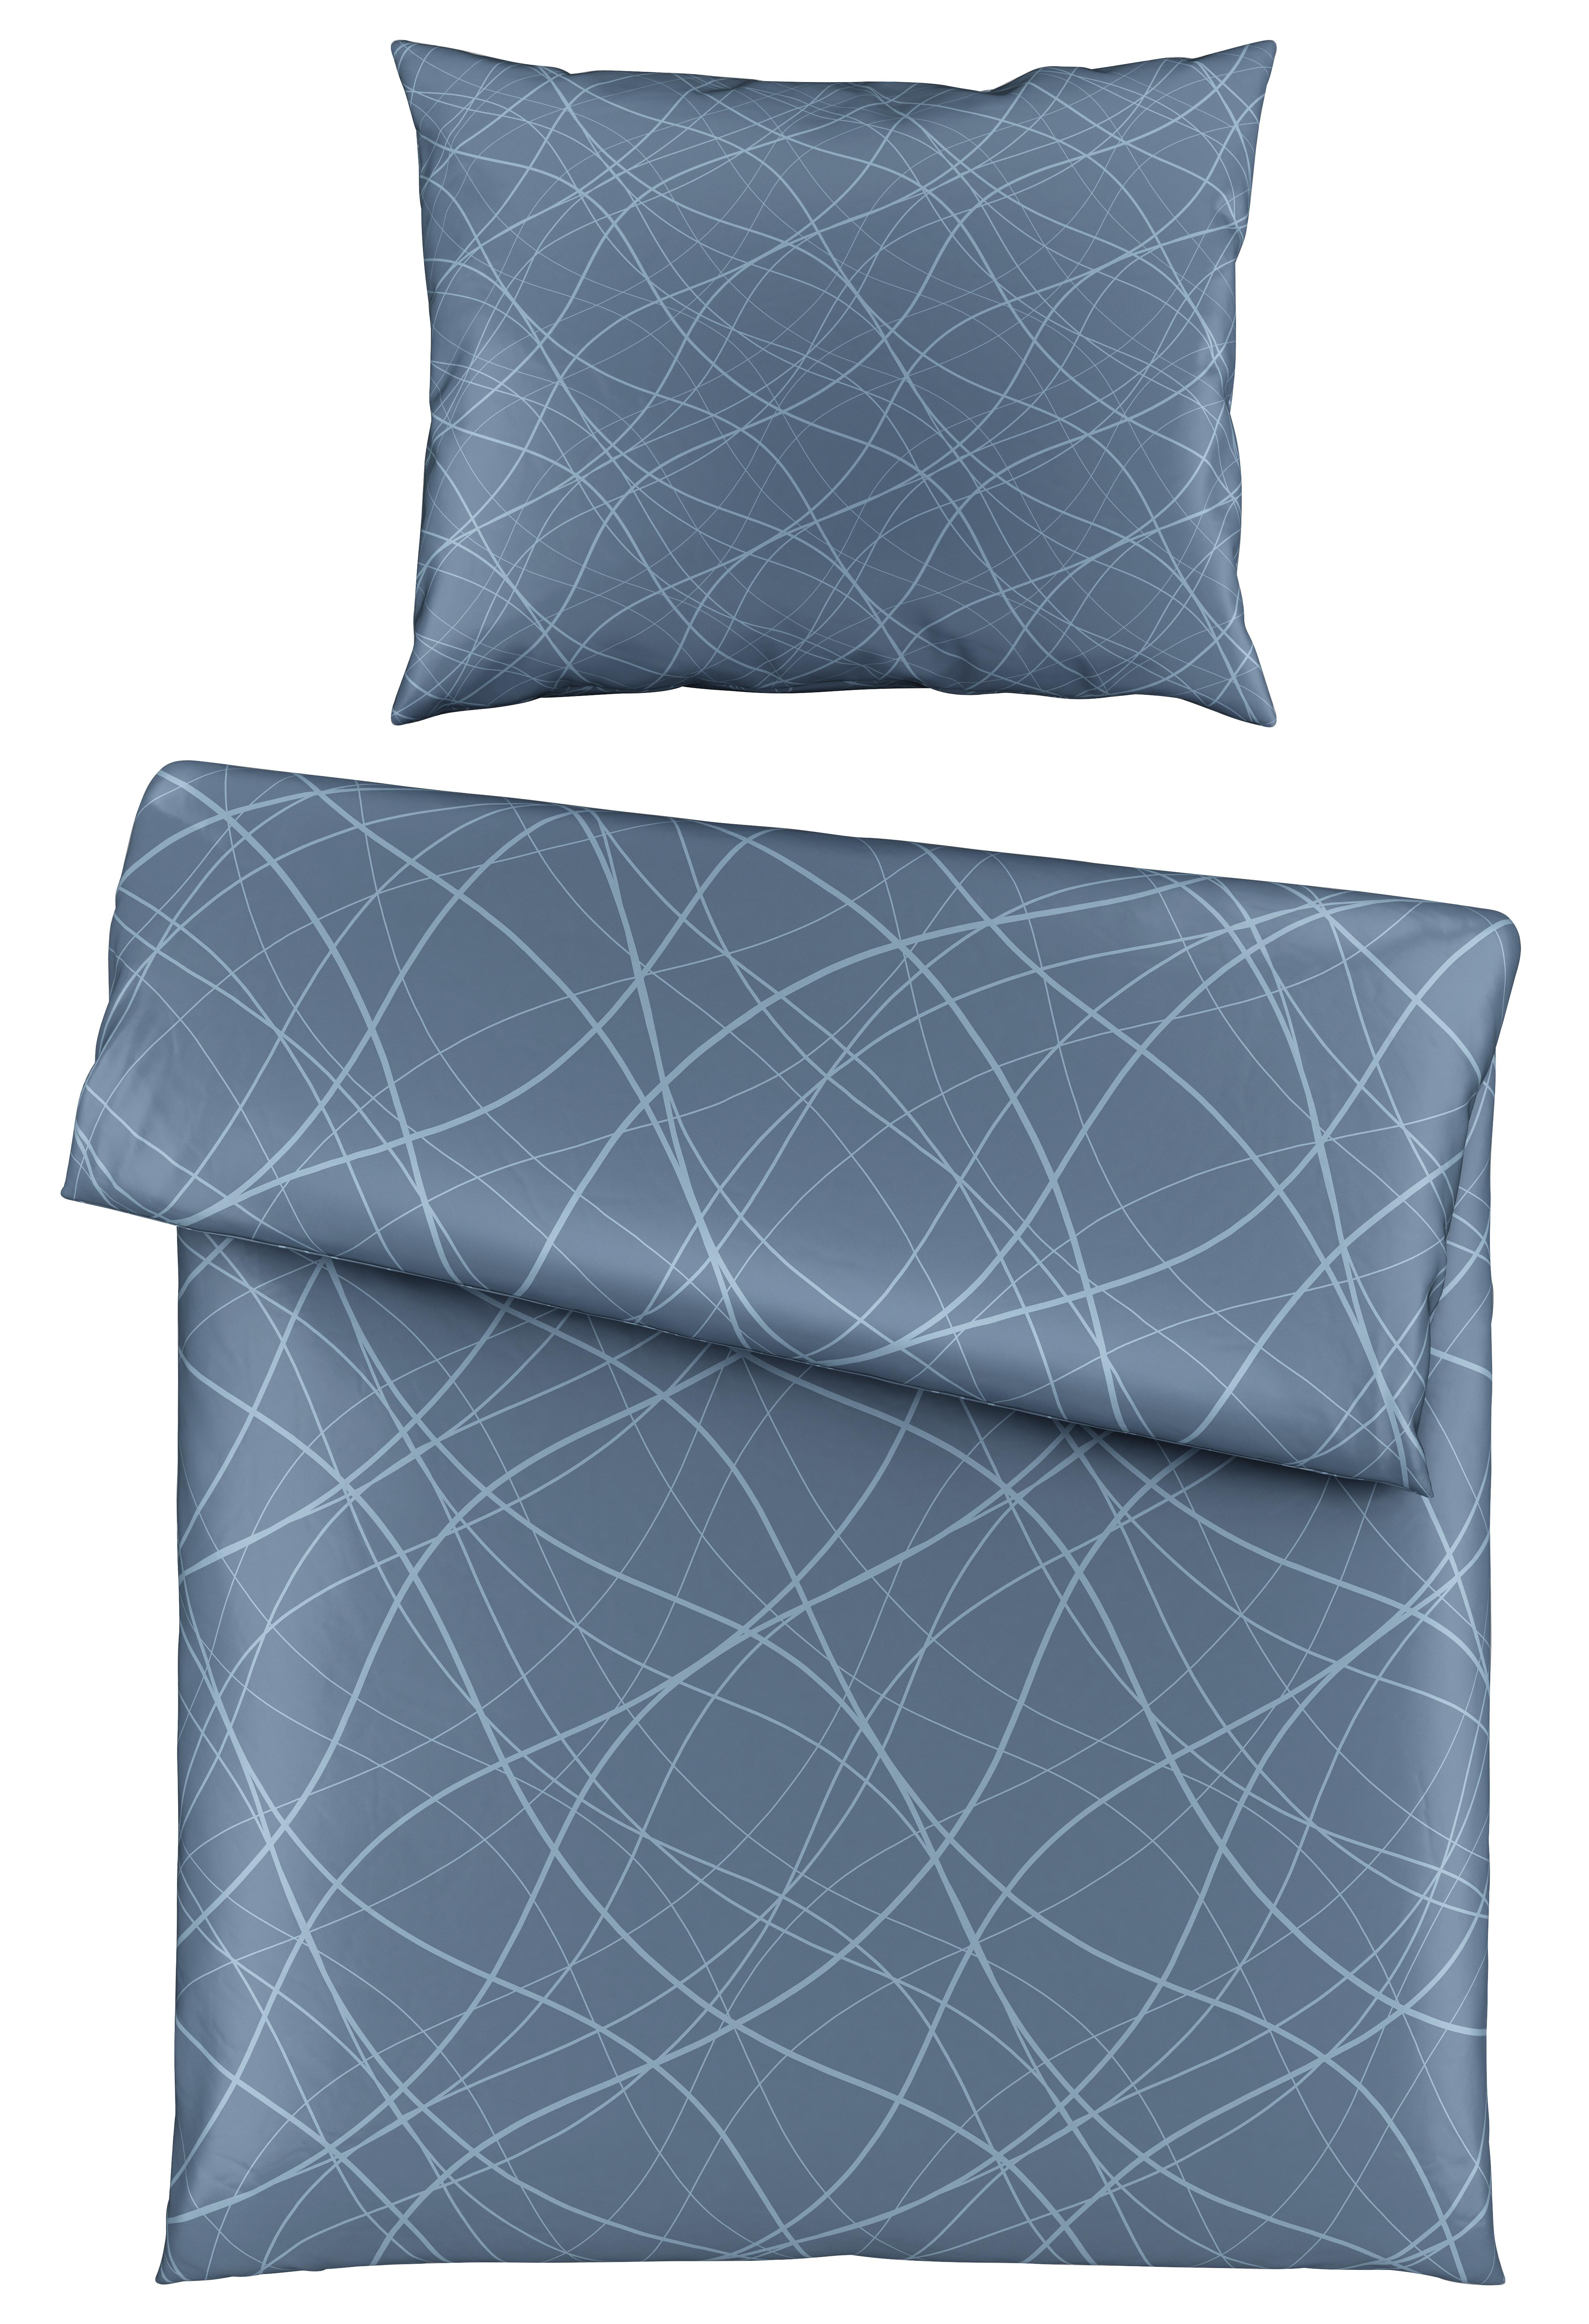 Povlečení Alex Design, 140/200cm - modrá, Moderní, textil (140/200cm) - Premium Living